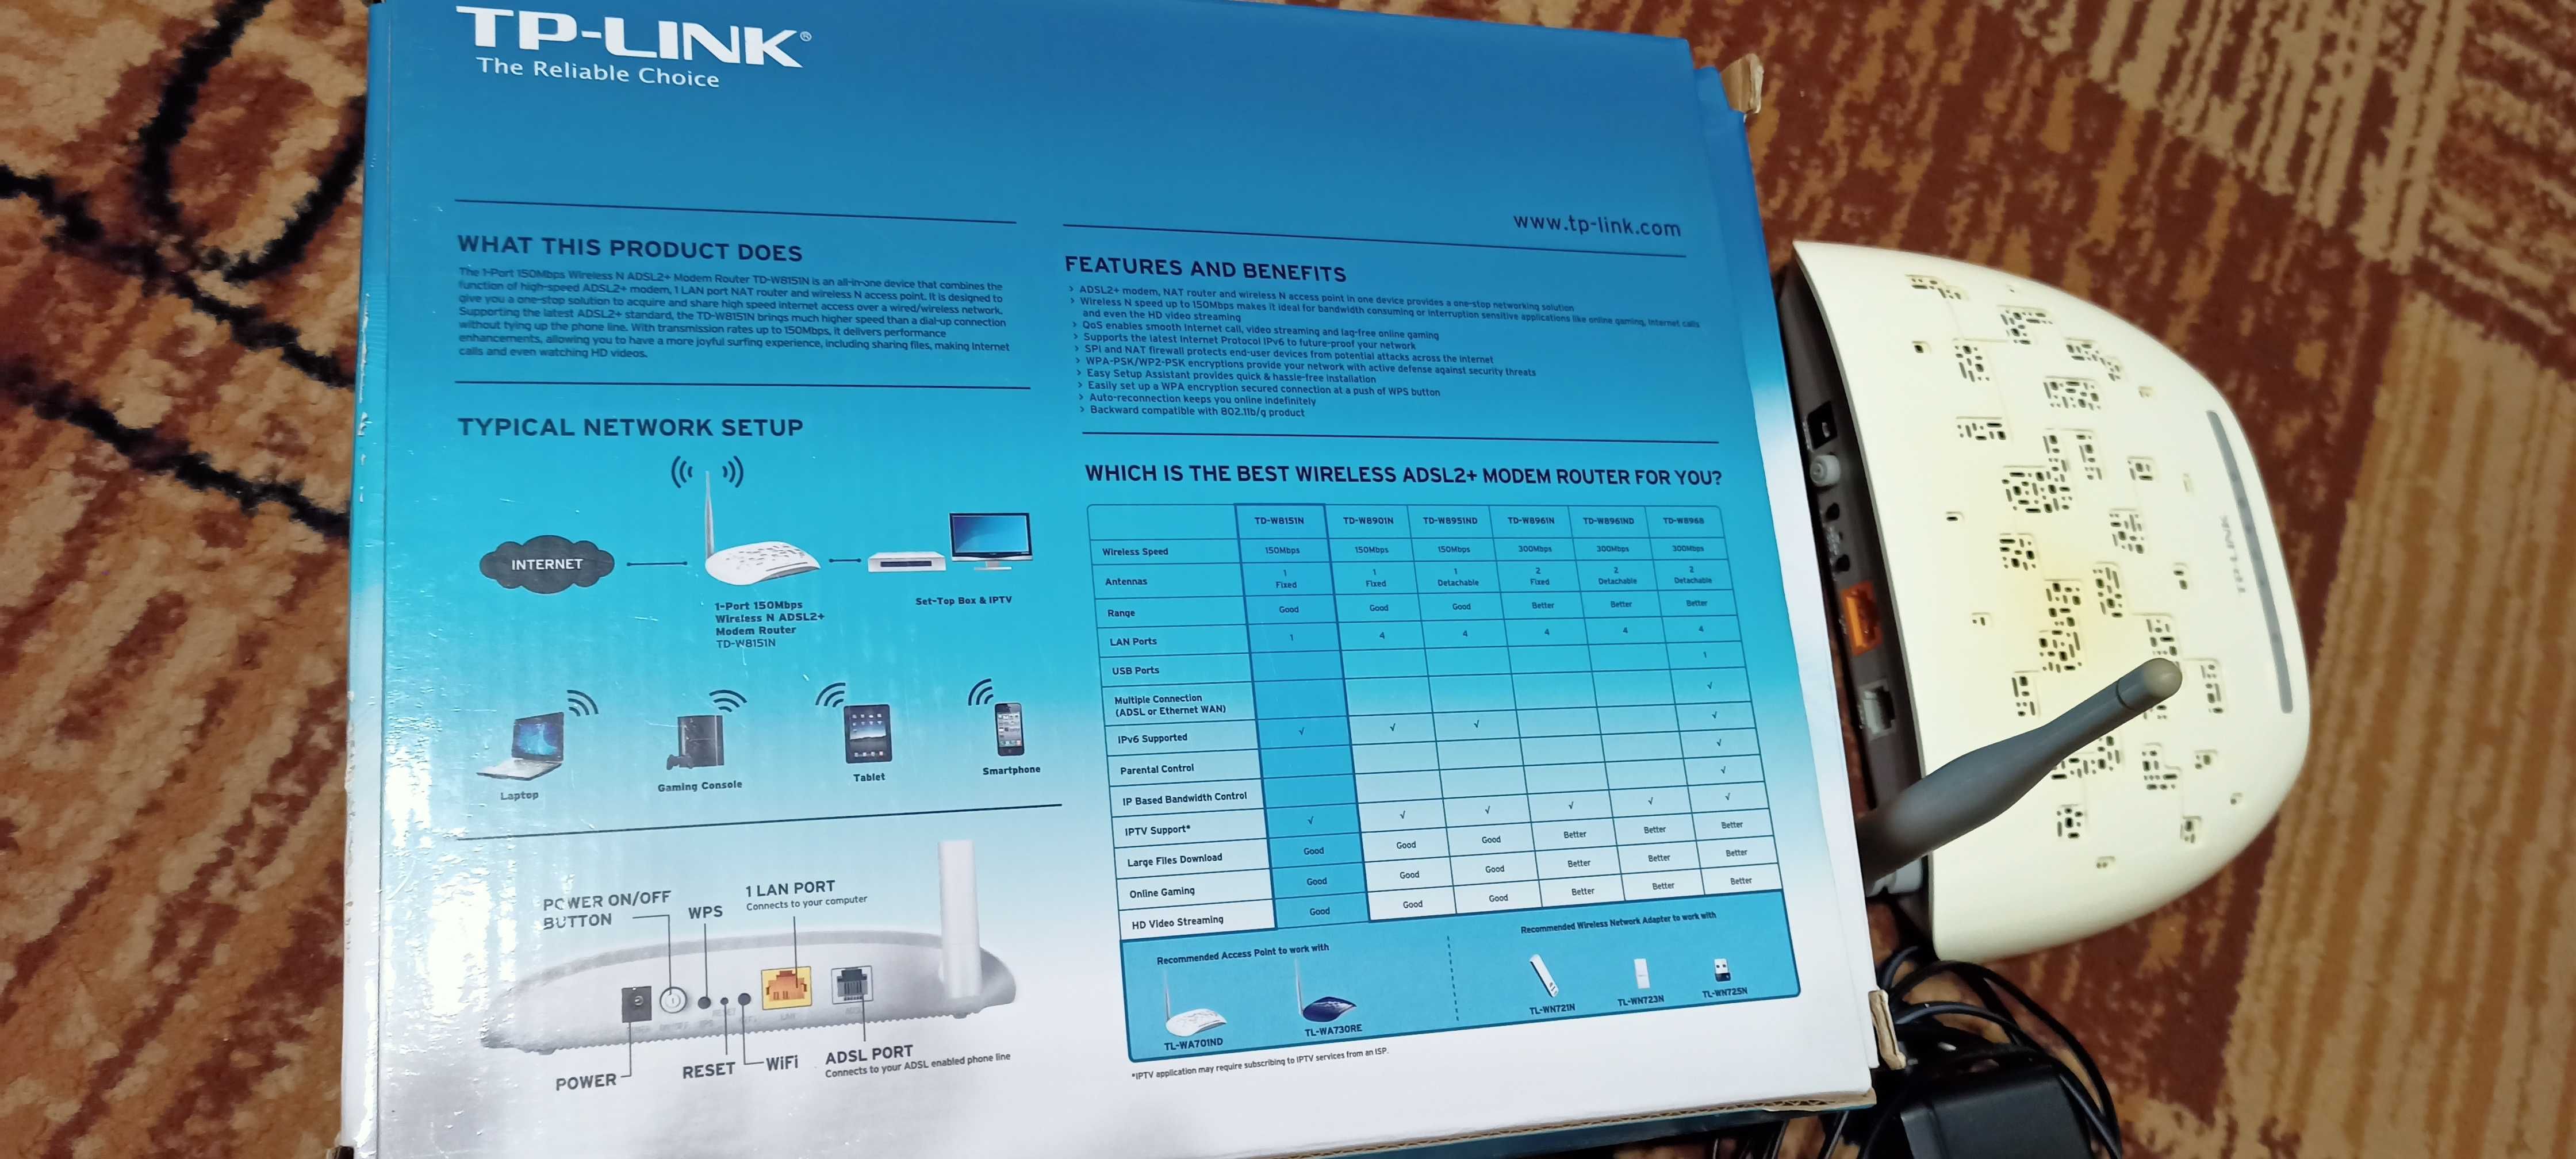 Продам ADSL WI-FI router TP-LINK, model TD-W8151N, б/у,робочий.